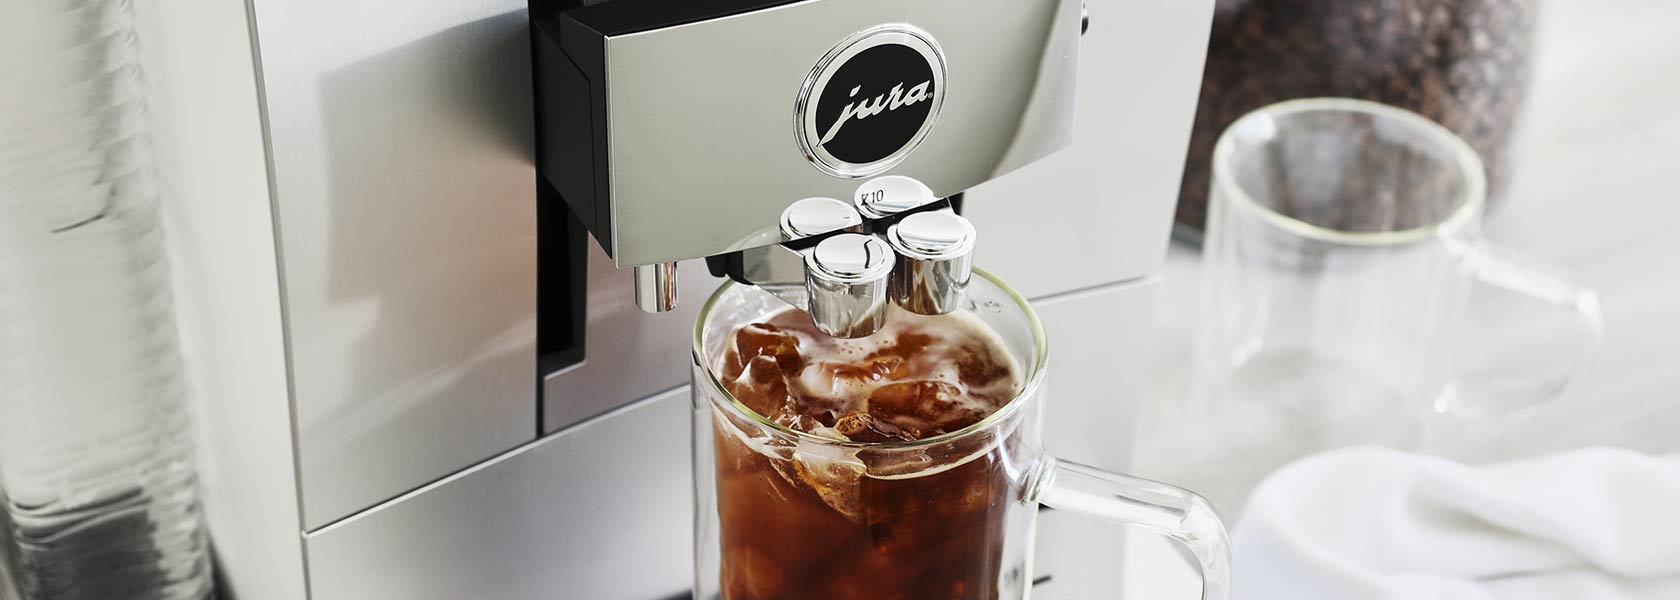 Jura Z10 coffee and espresso maker with iced coffee